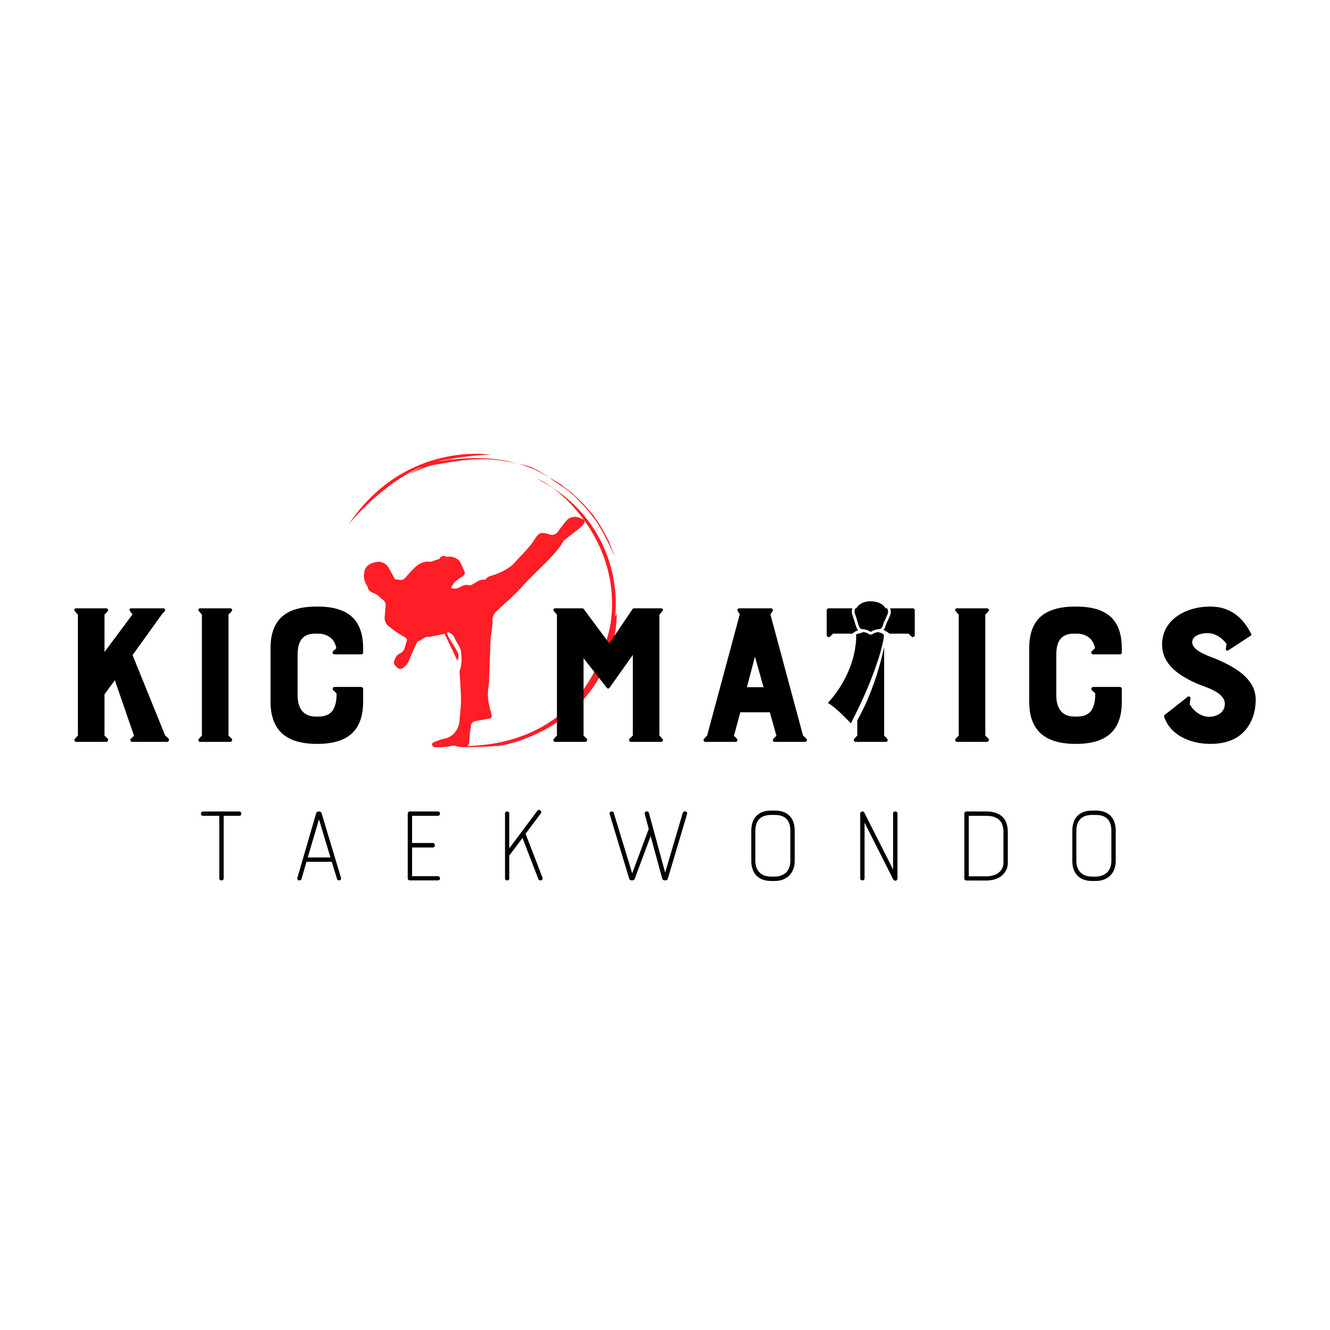 Kickmatics Taekwondo 